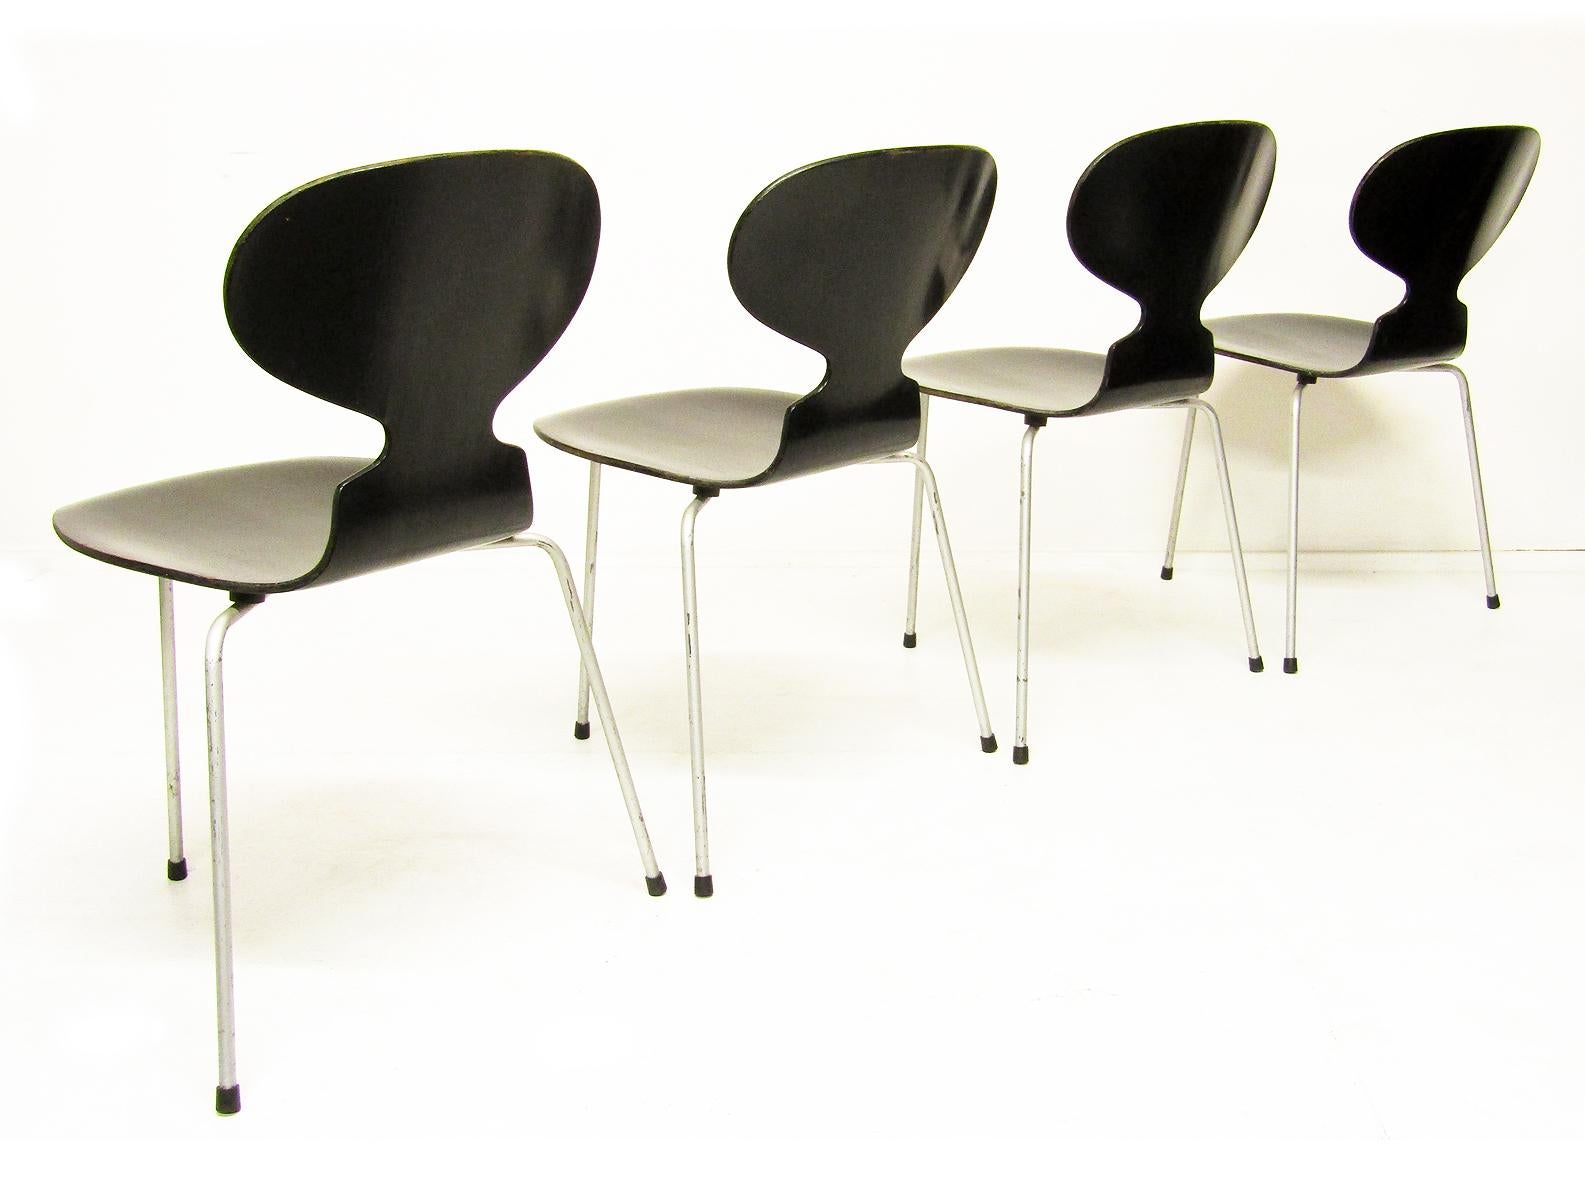 20th Century Set of Four Black 1950s Danish Ant Chairs by Arne Jacobsen for Fritz Hansen